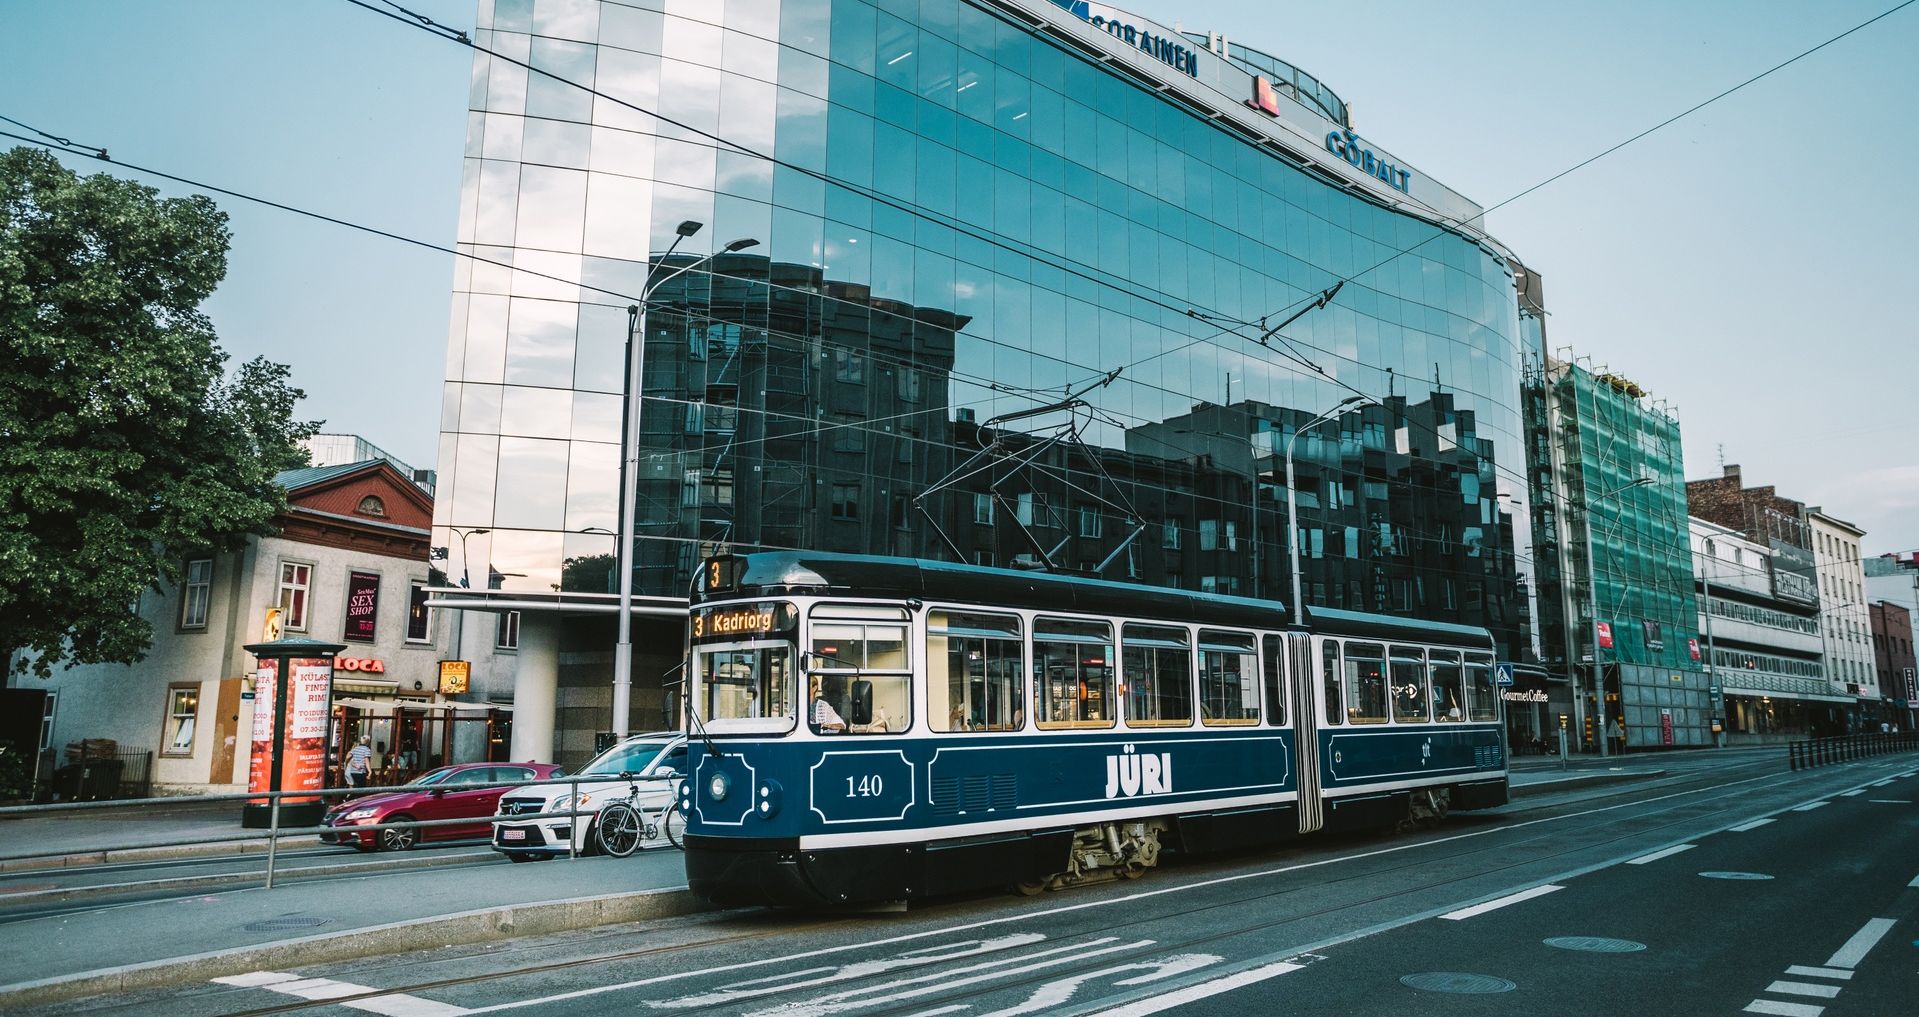 Tram in Tallinn City Centre